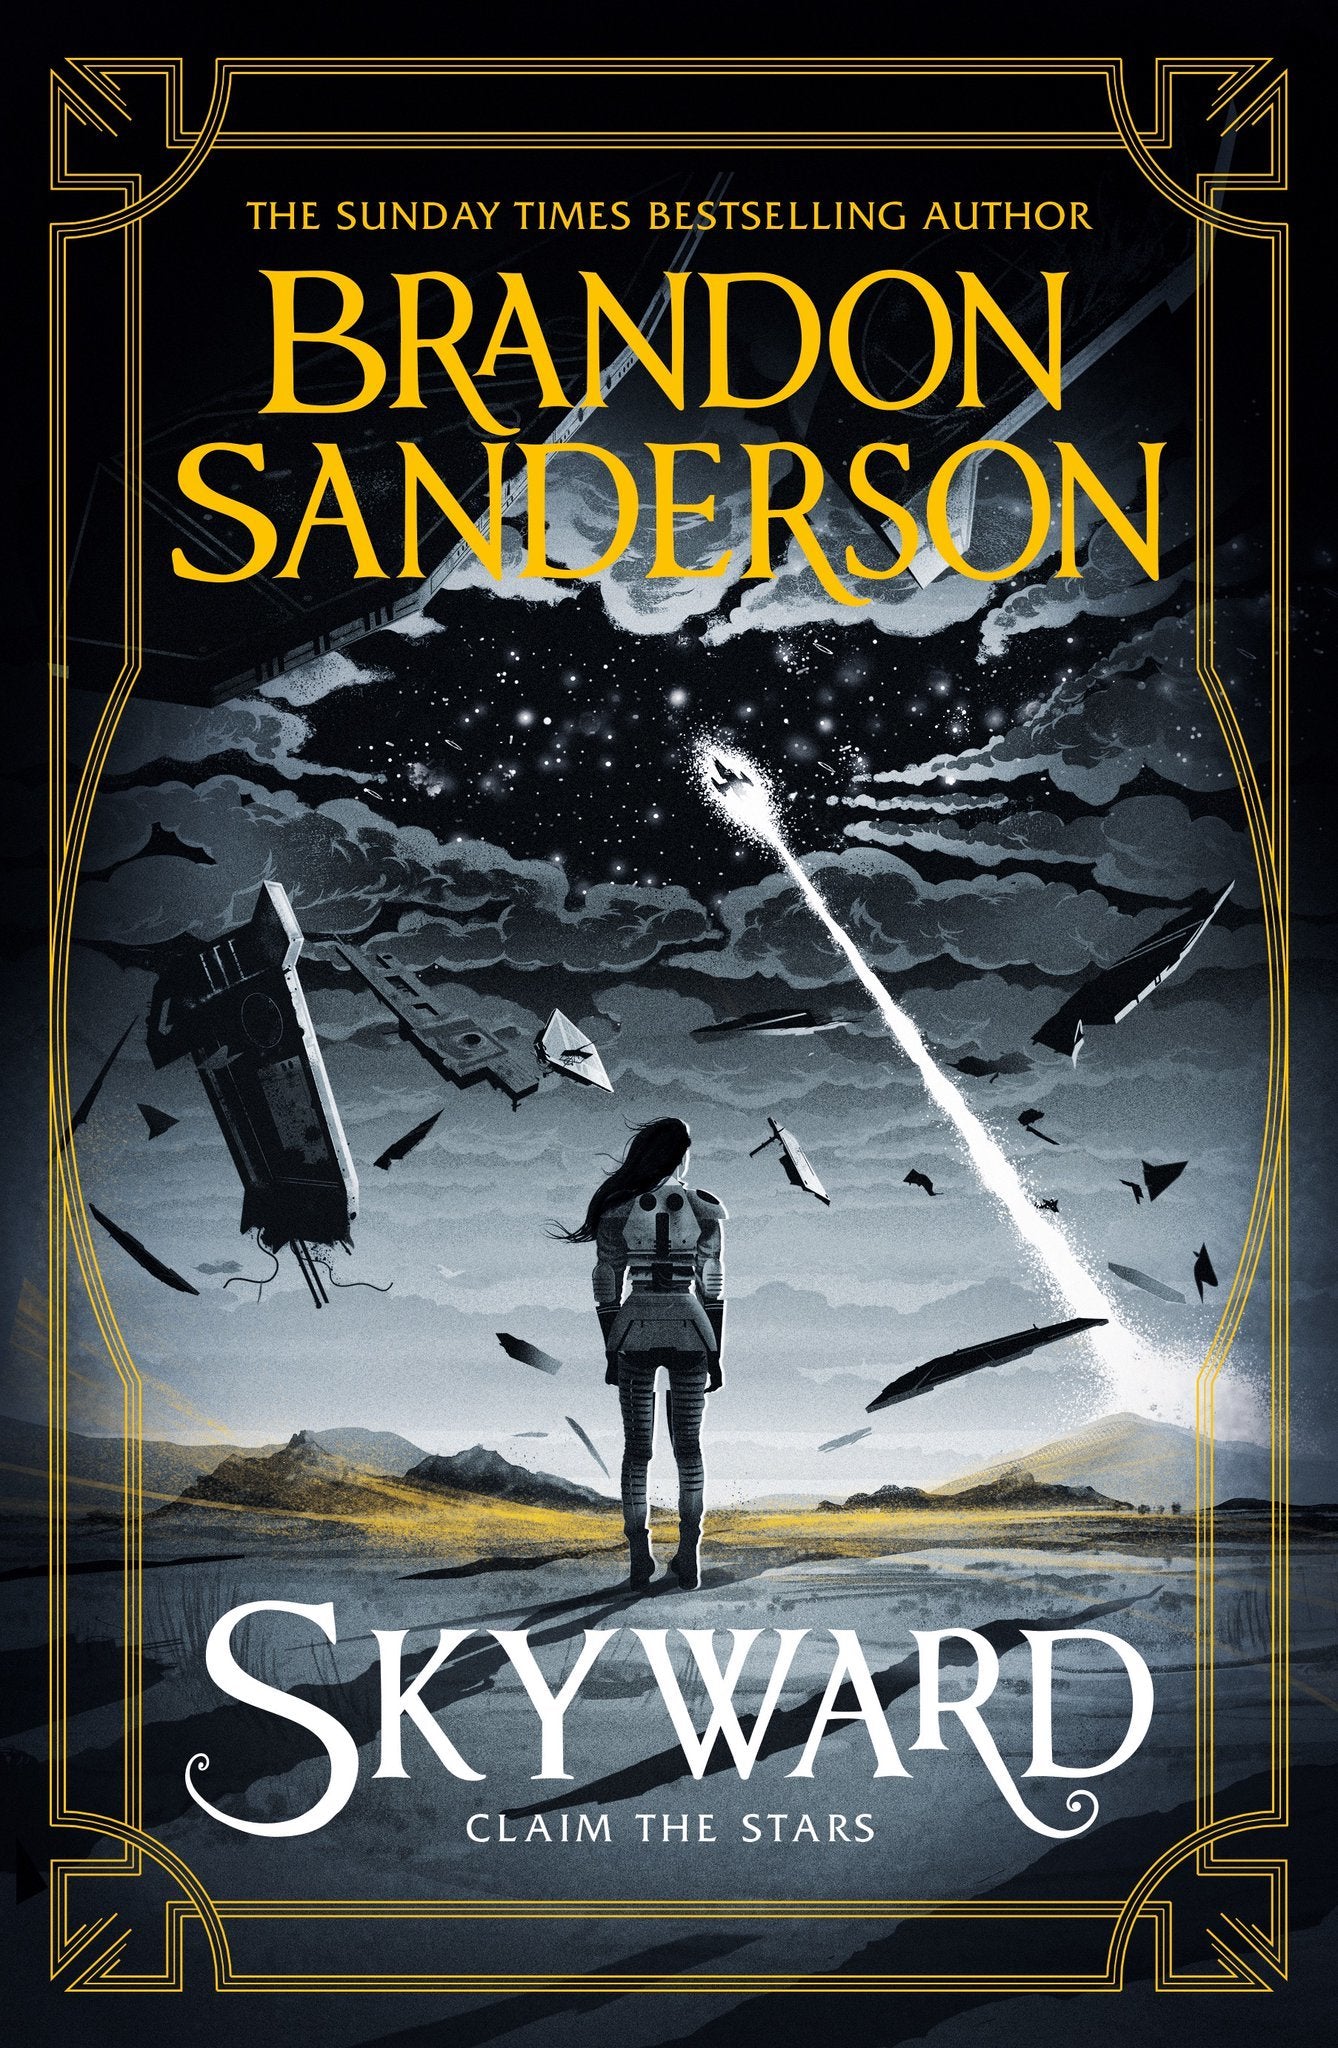 Skyward: The First Skyward Novel